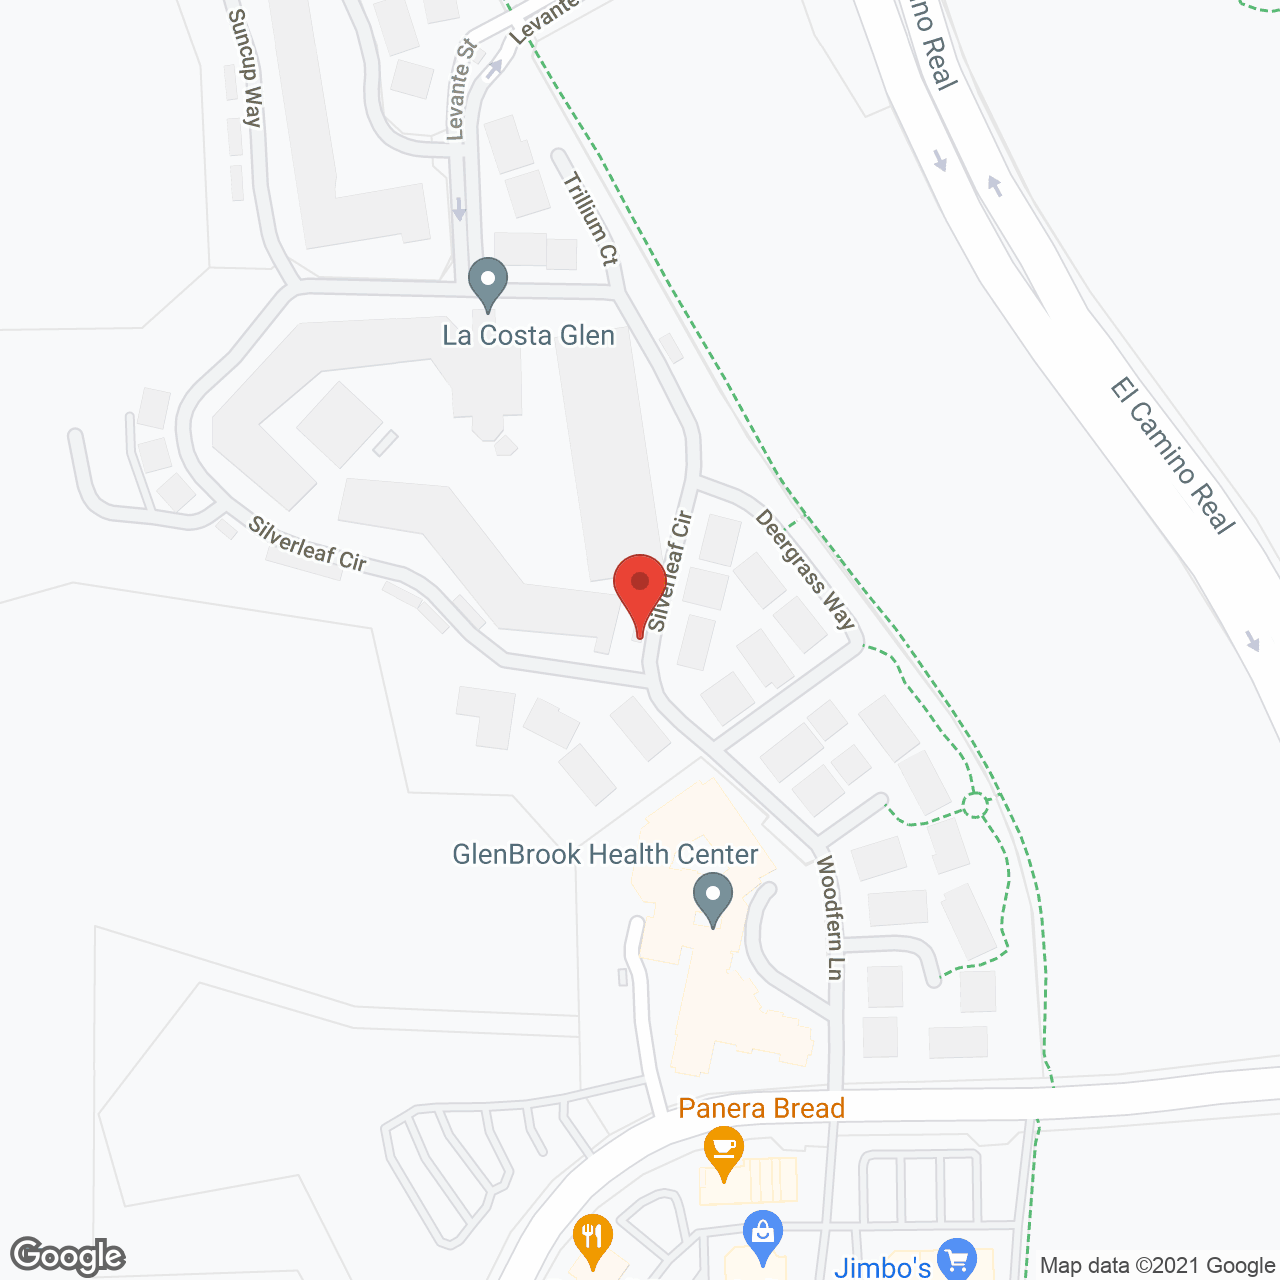 La Costa Glen in google map